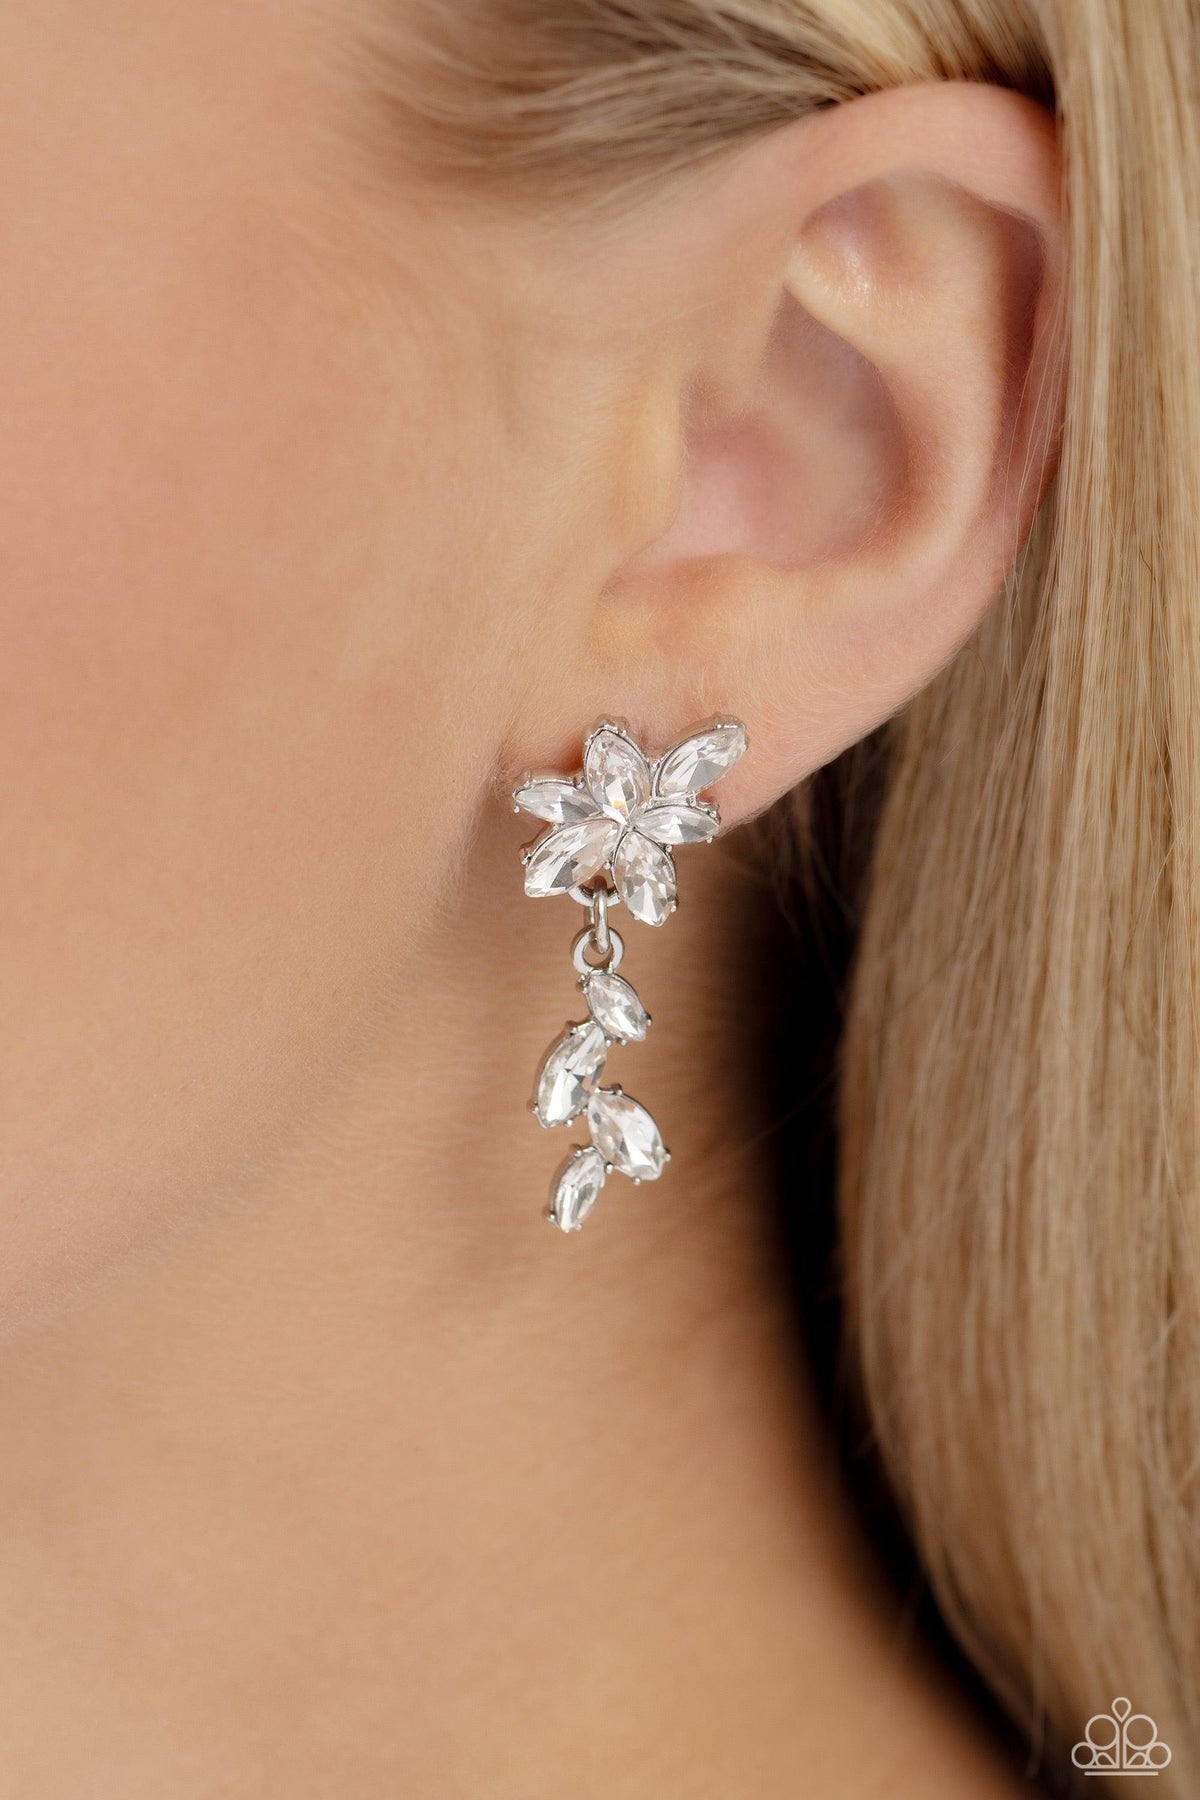 Goddess Grove White Rhinestone Earrings - Paparazzi Accessories-on model - CarasShop.com - $5 Jewelry by Cara Jewels